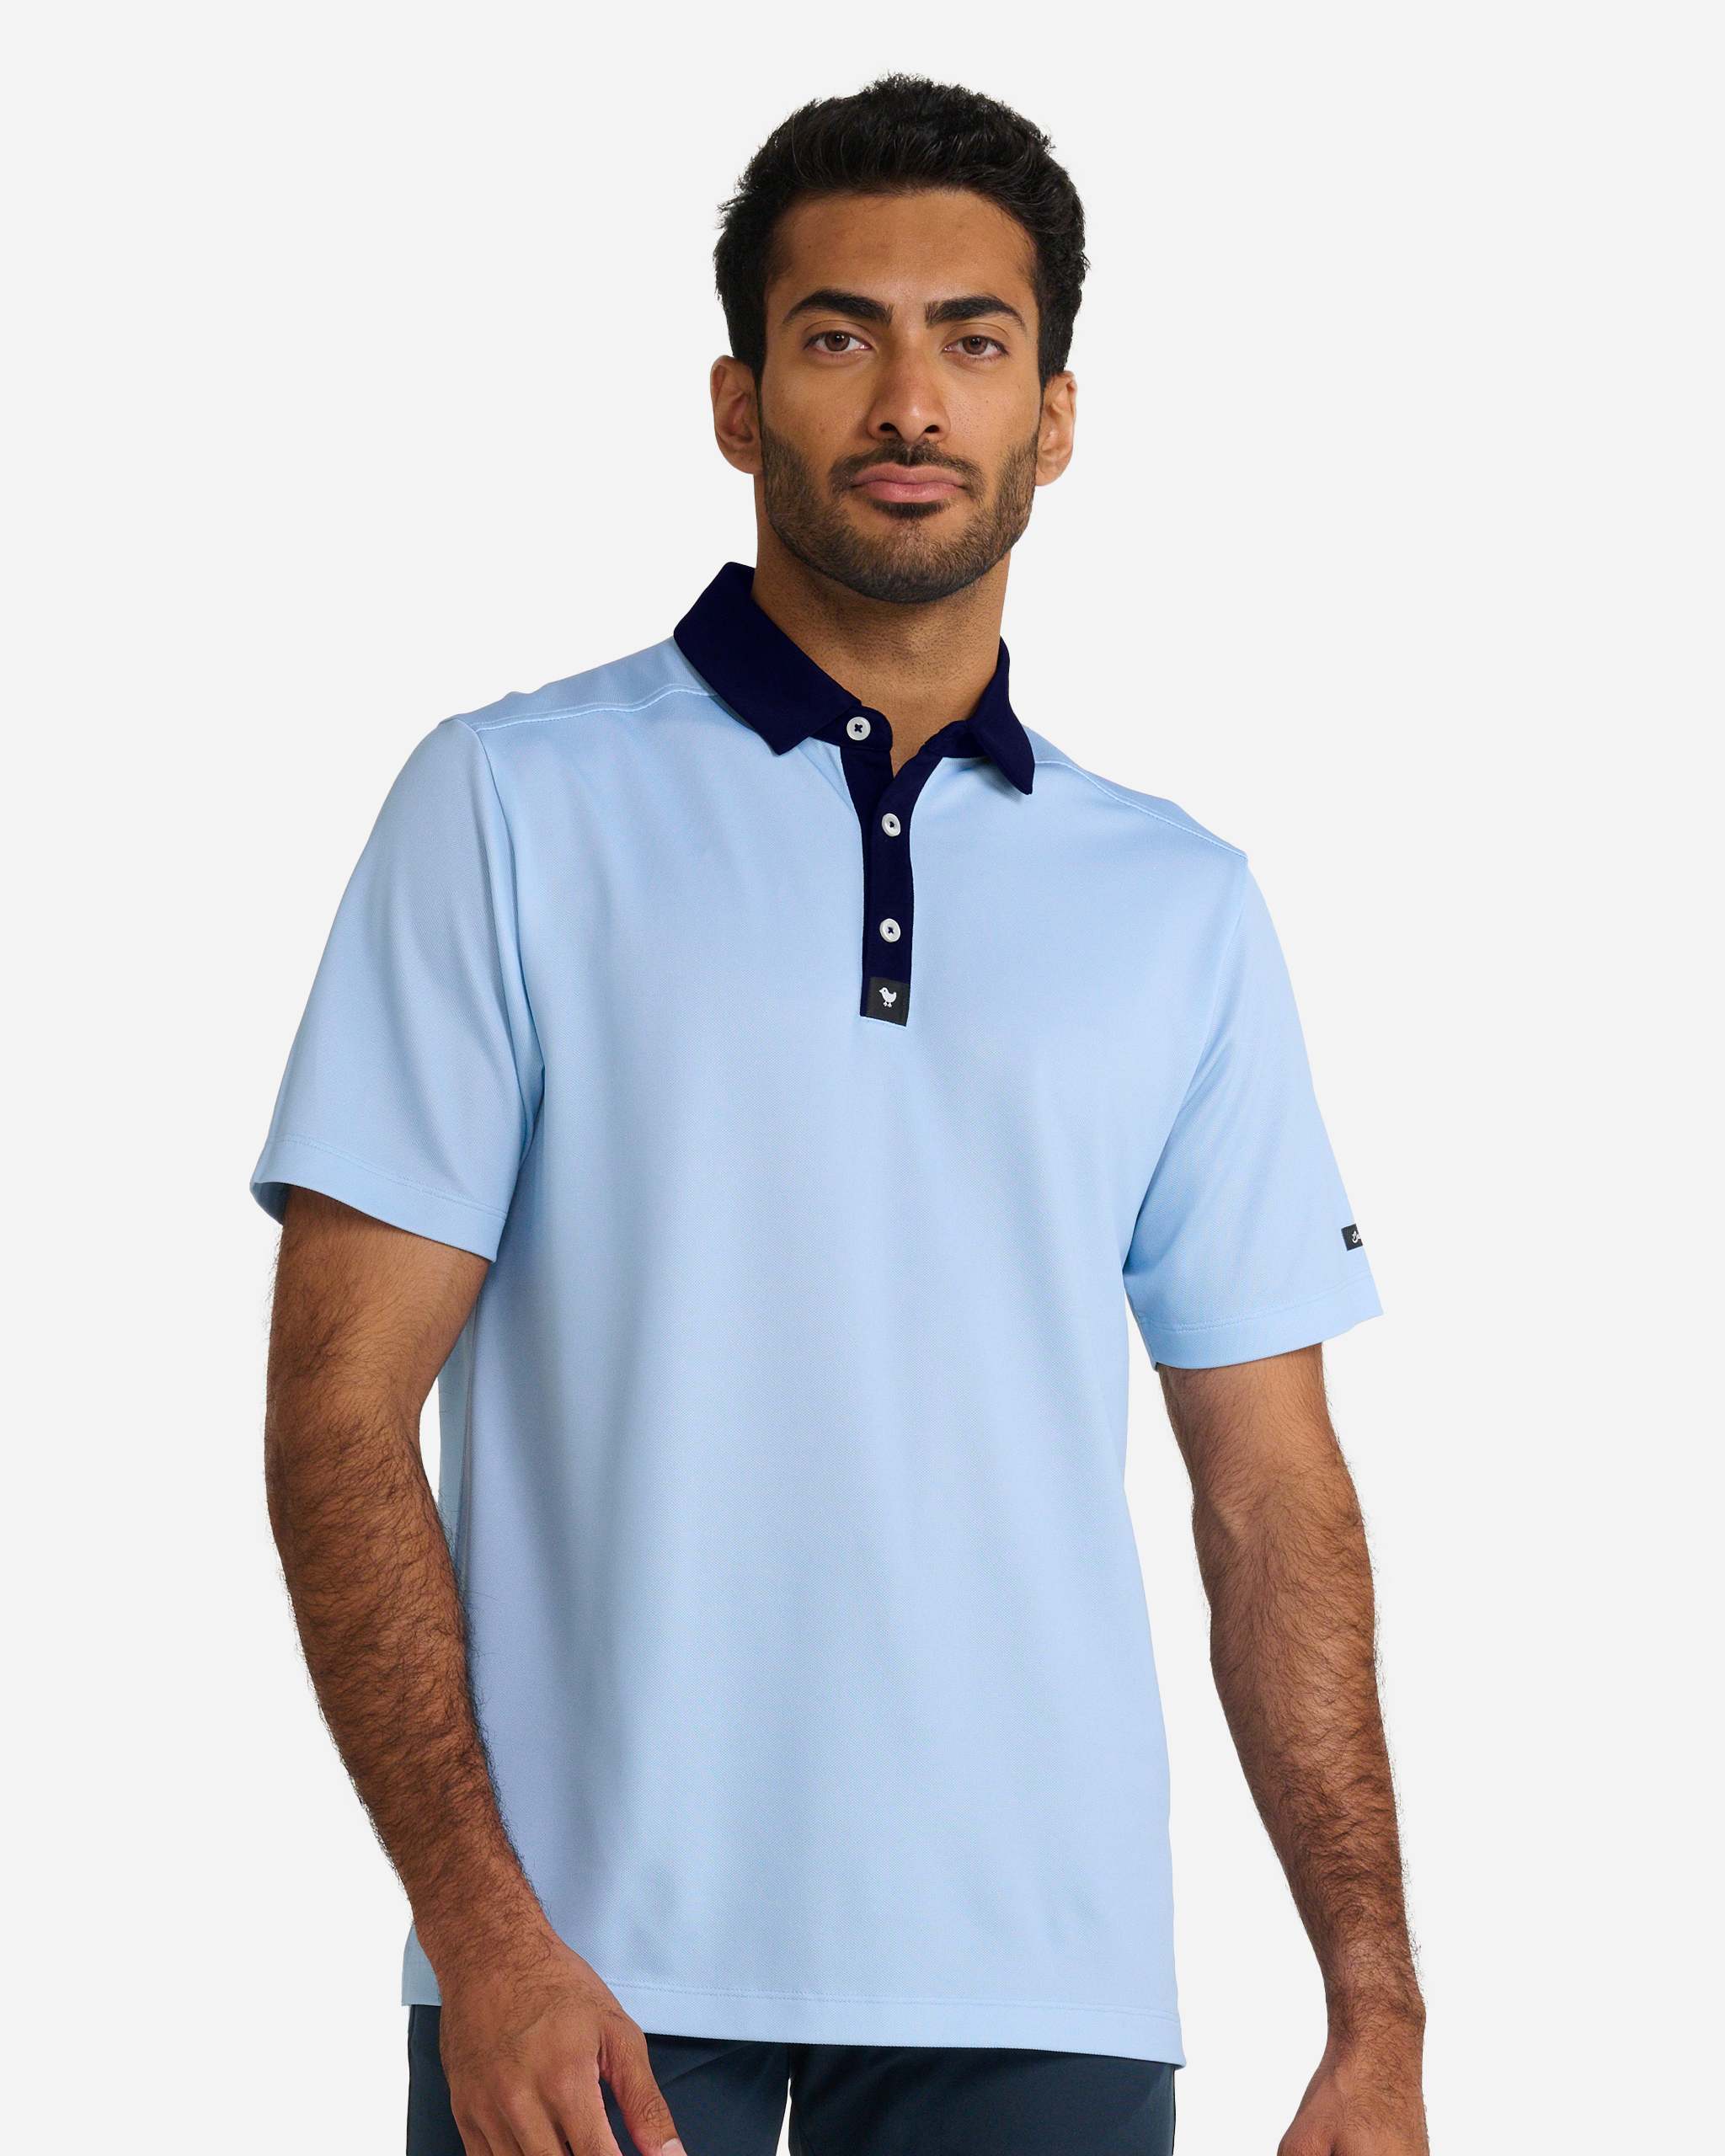 Performance Golf Polos & Golf Shirts